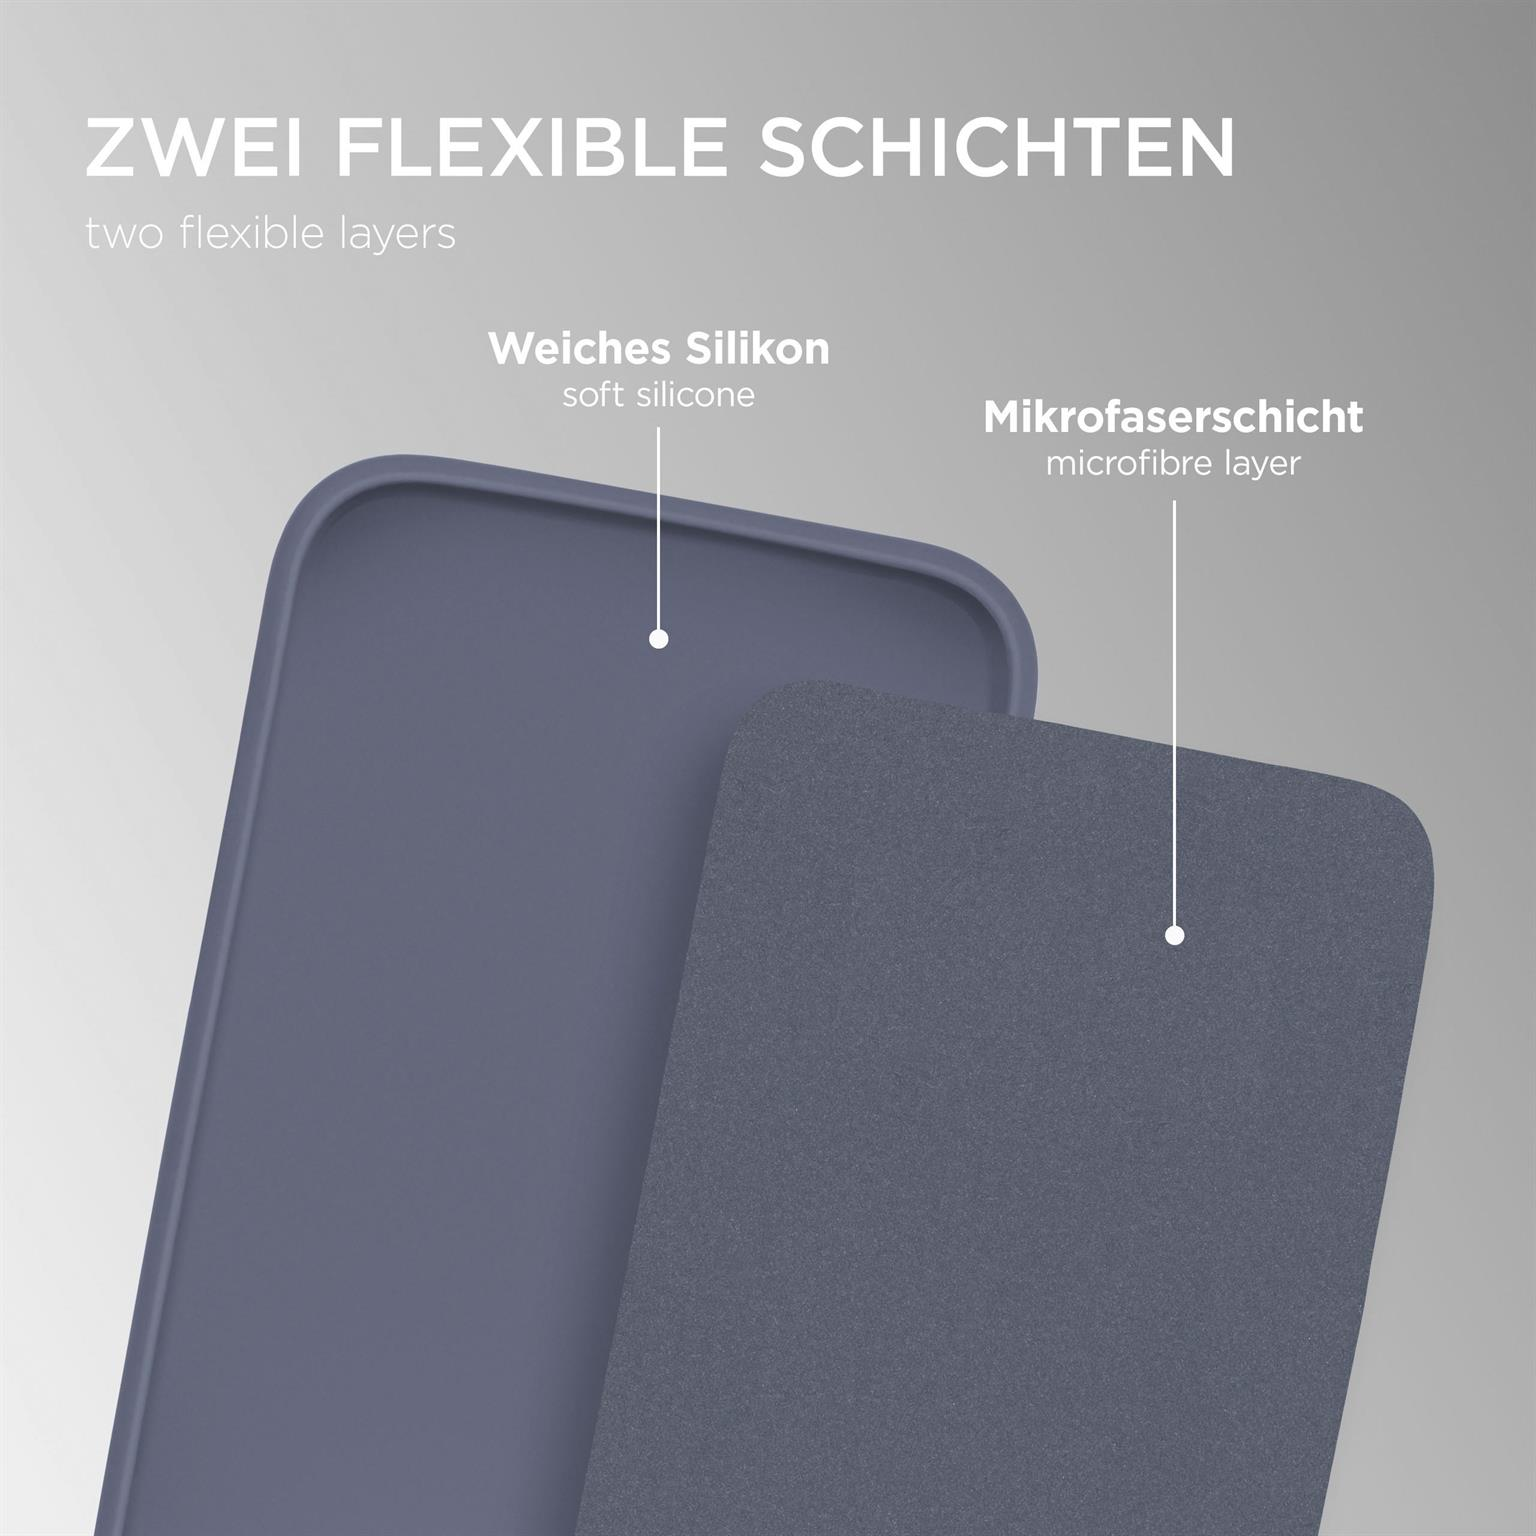 Case, Apple, 14 iPhone ONEFLOW Pro Soft Backcover, Lavendelgrau Max,